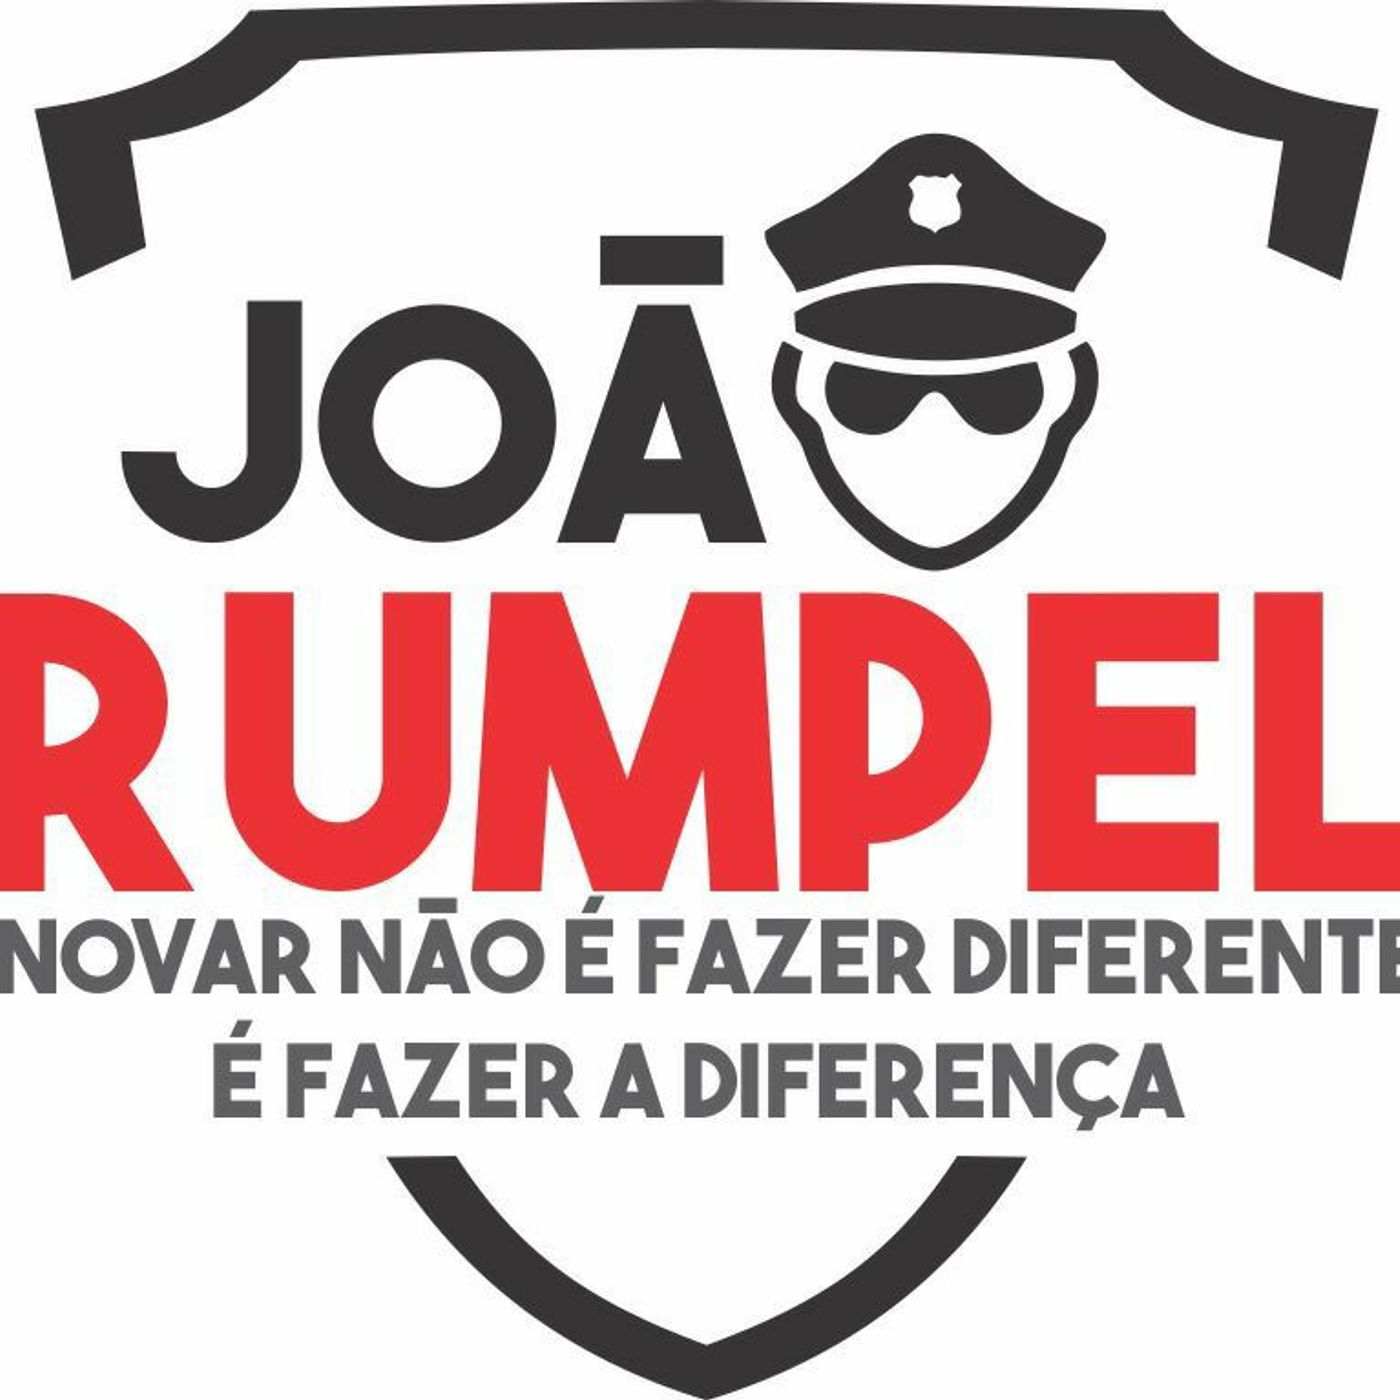 João Rumpel's show